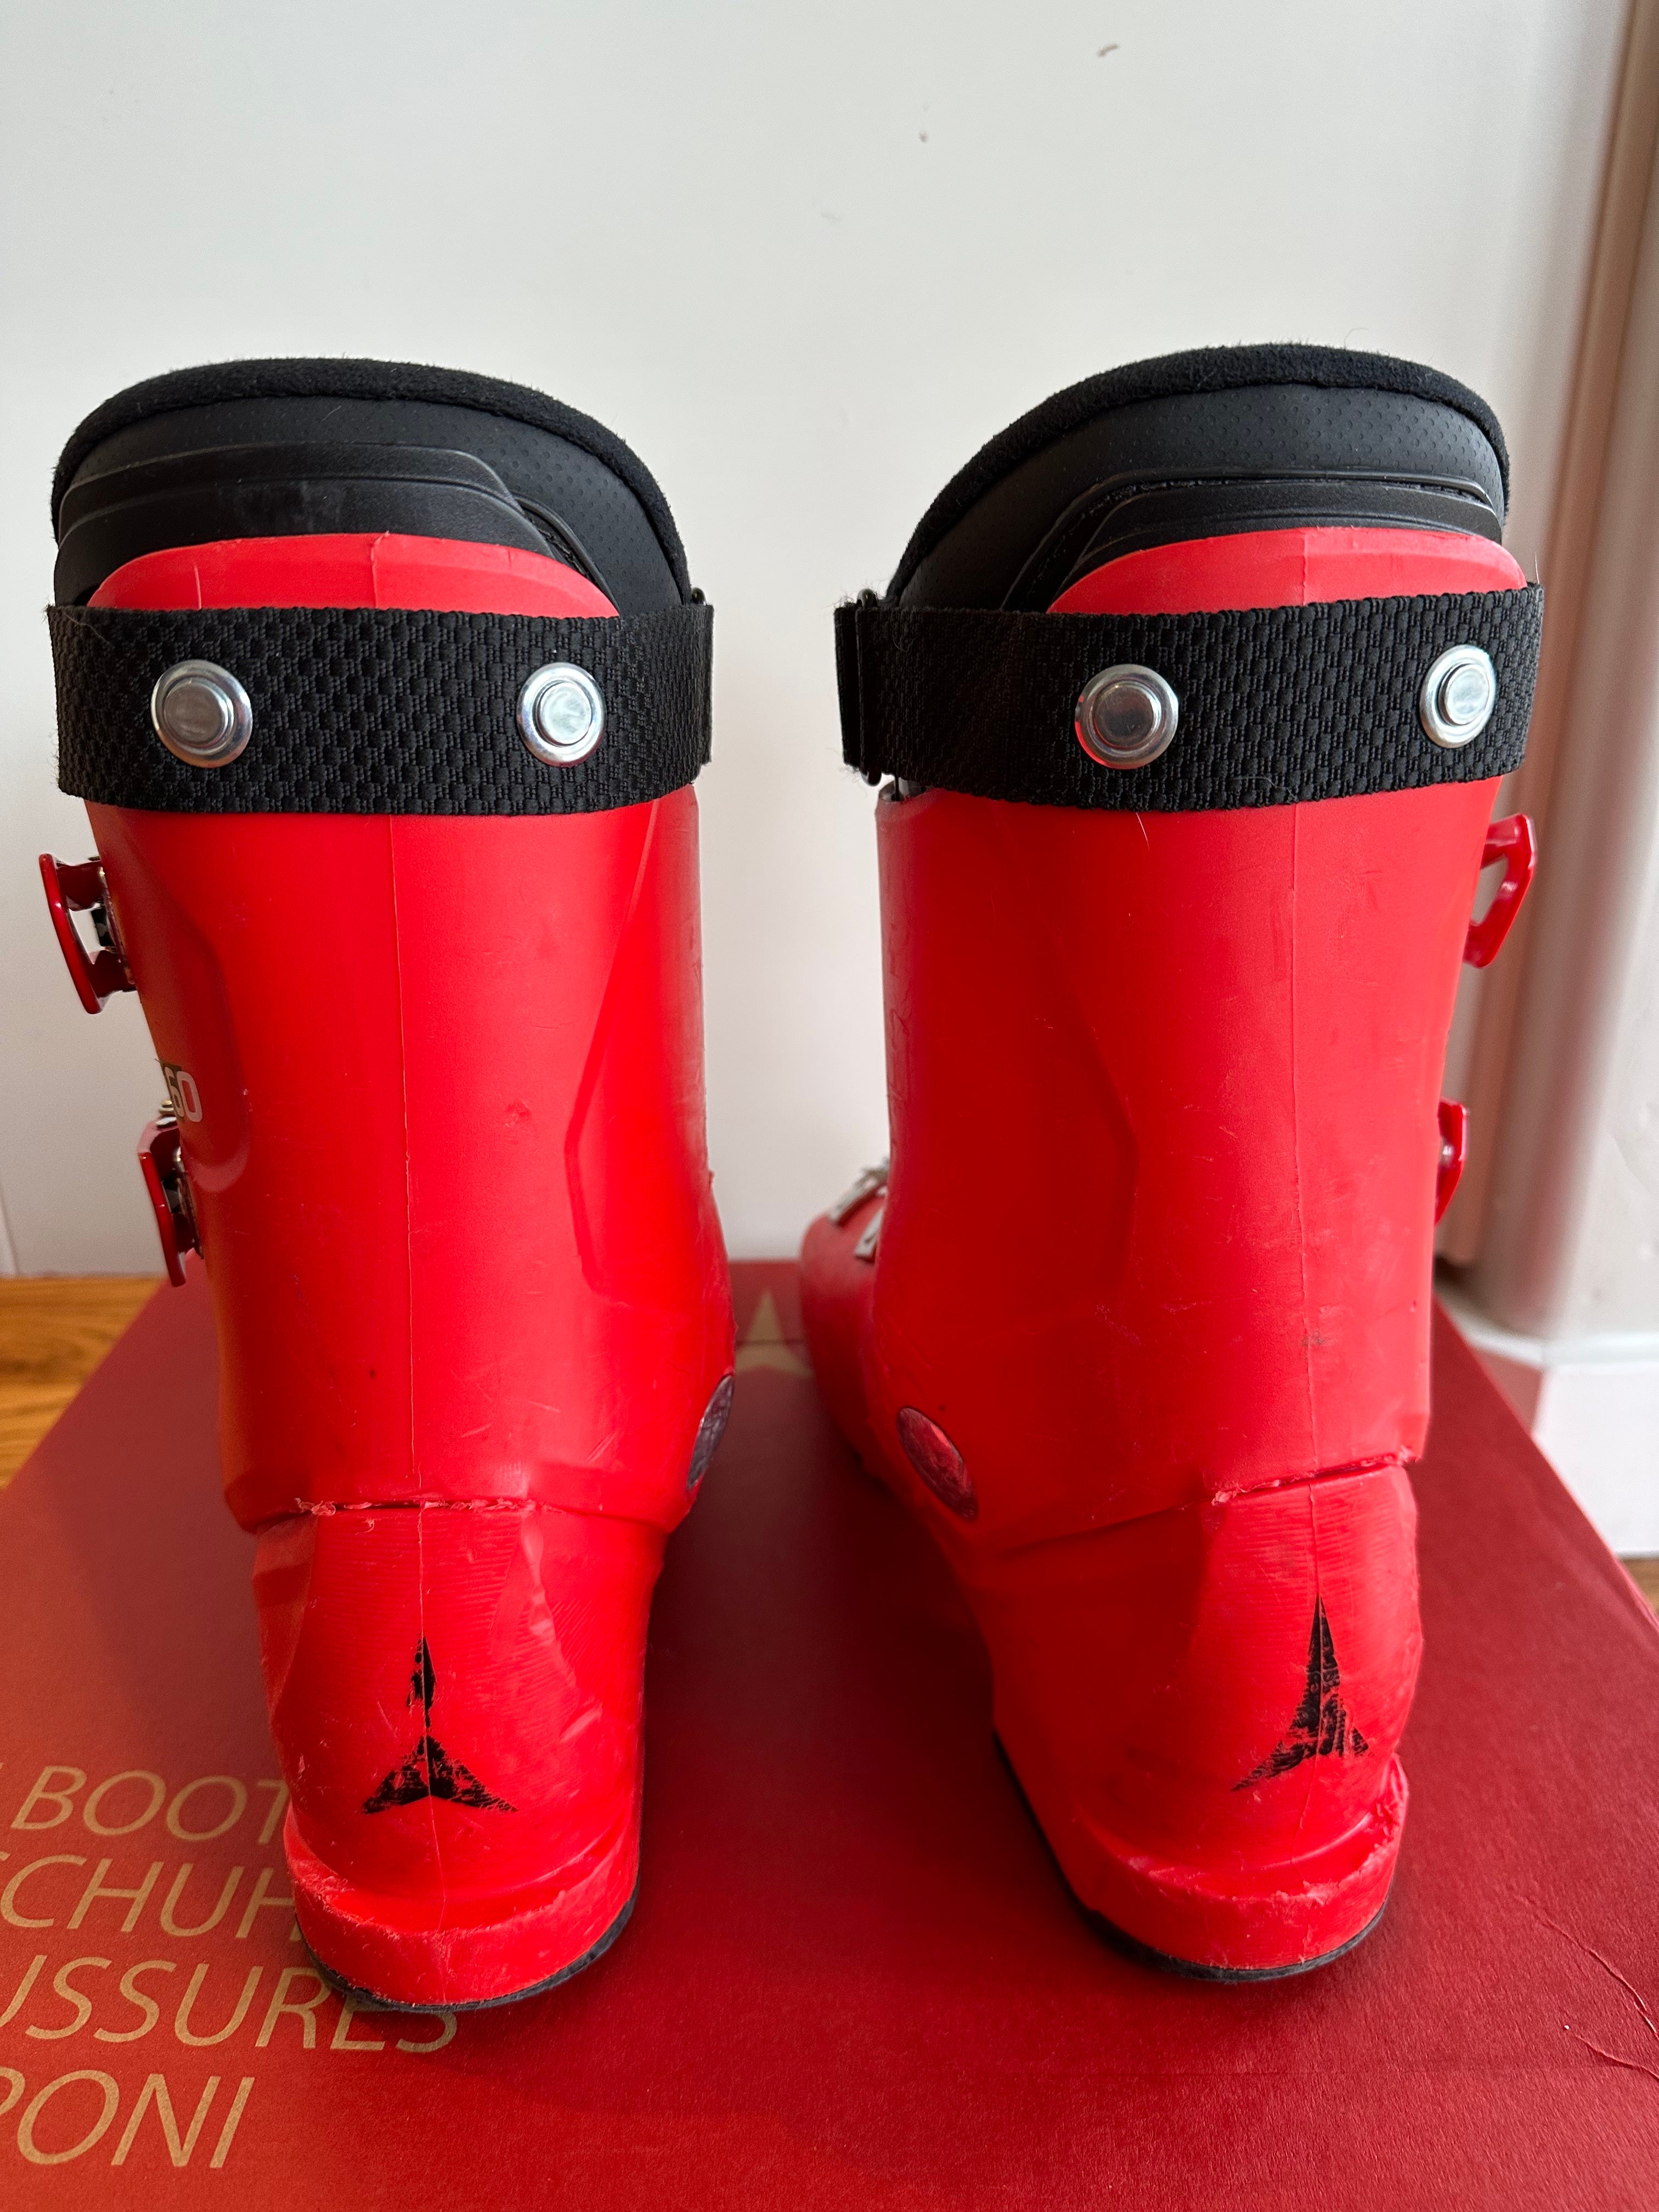 Atomic Redster JR 60 Ski Boots Size 23.5 | SidelineSwap